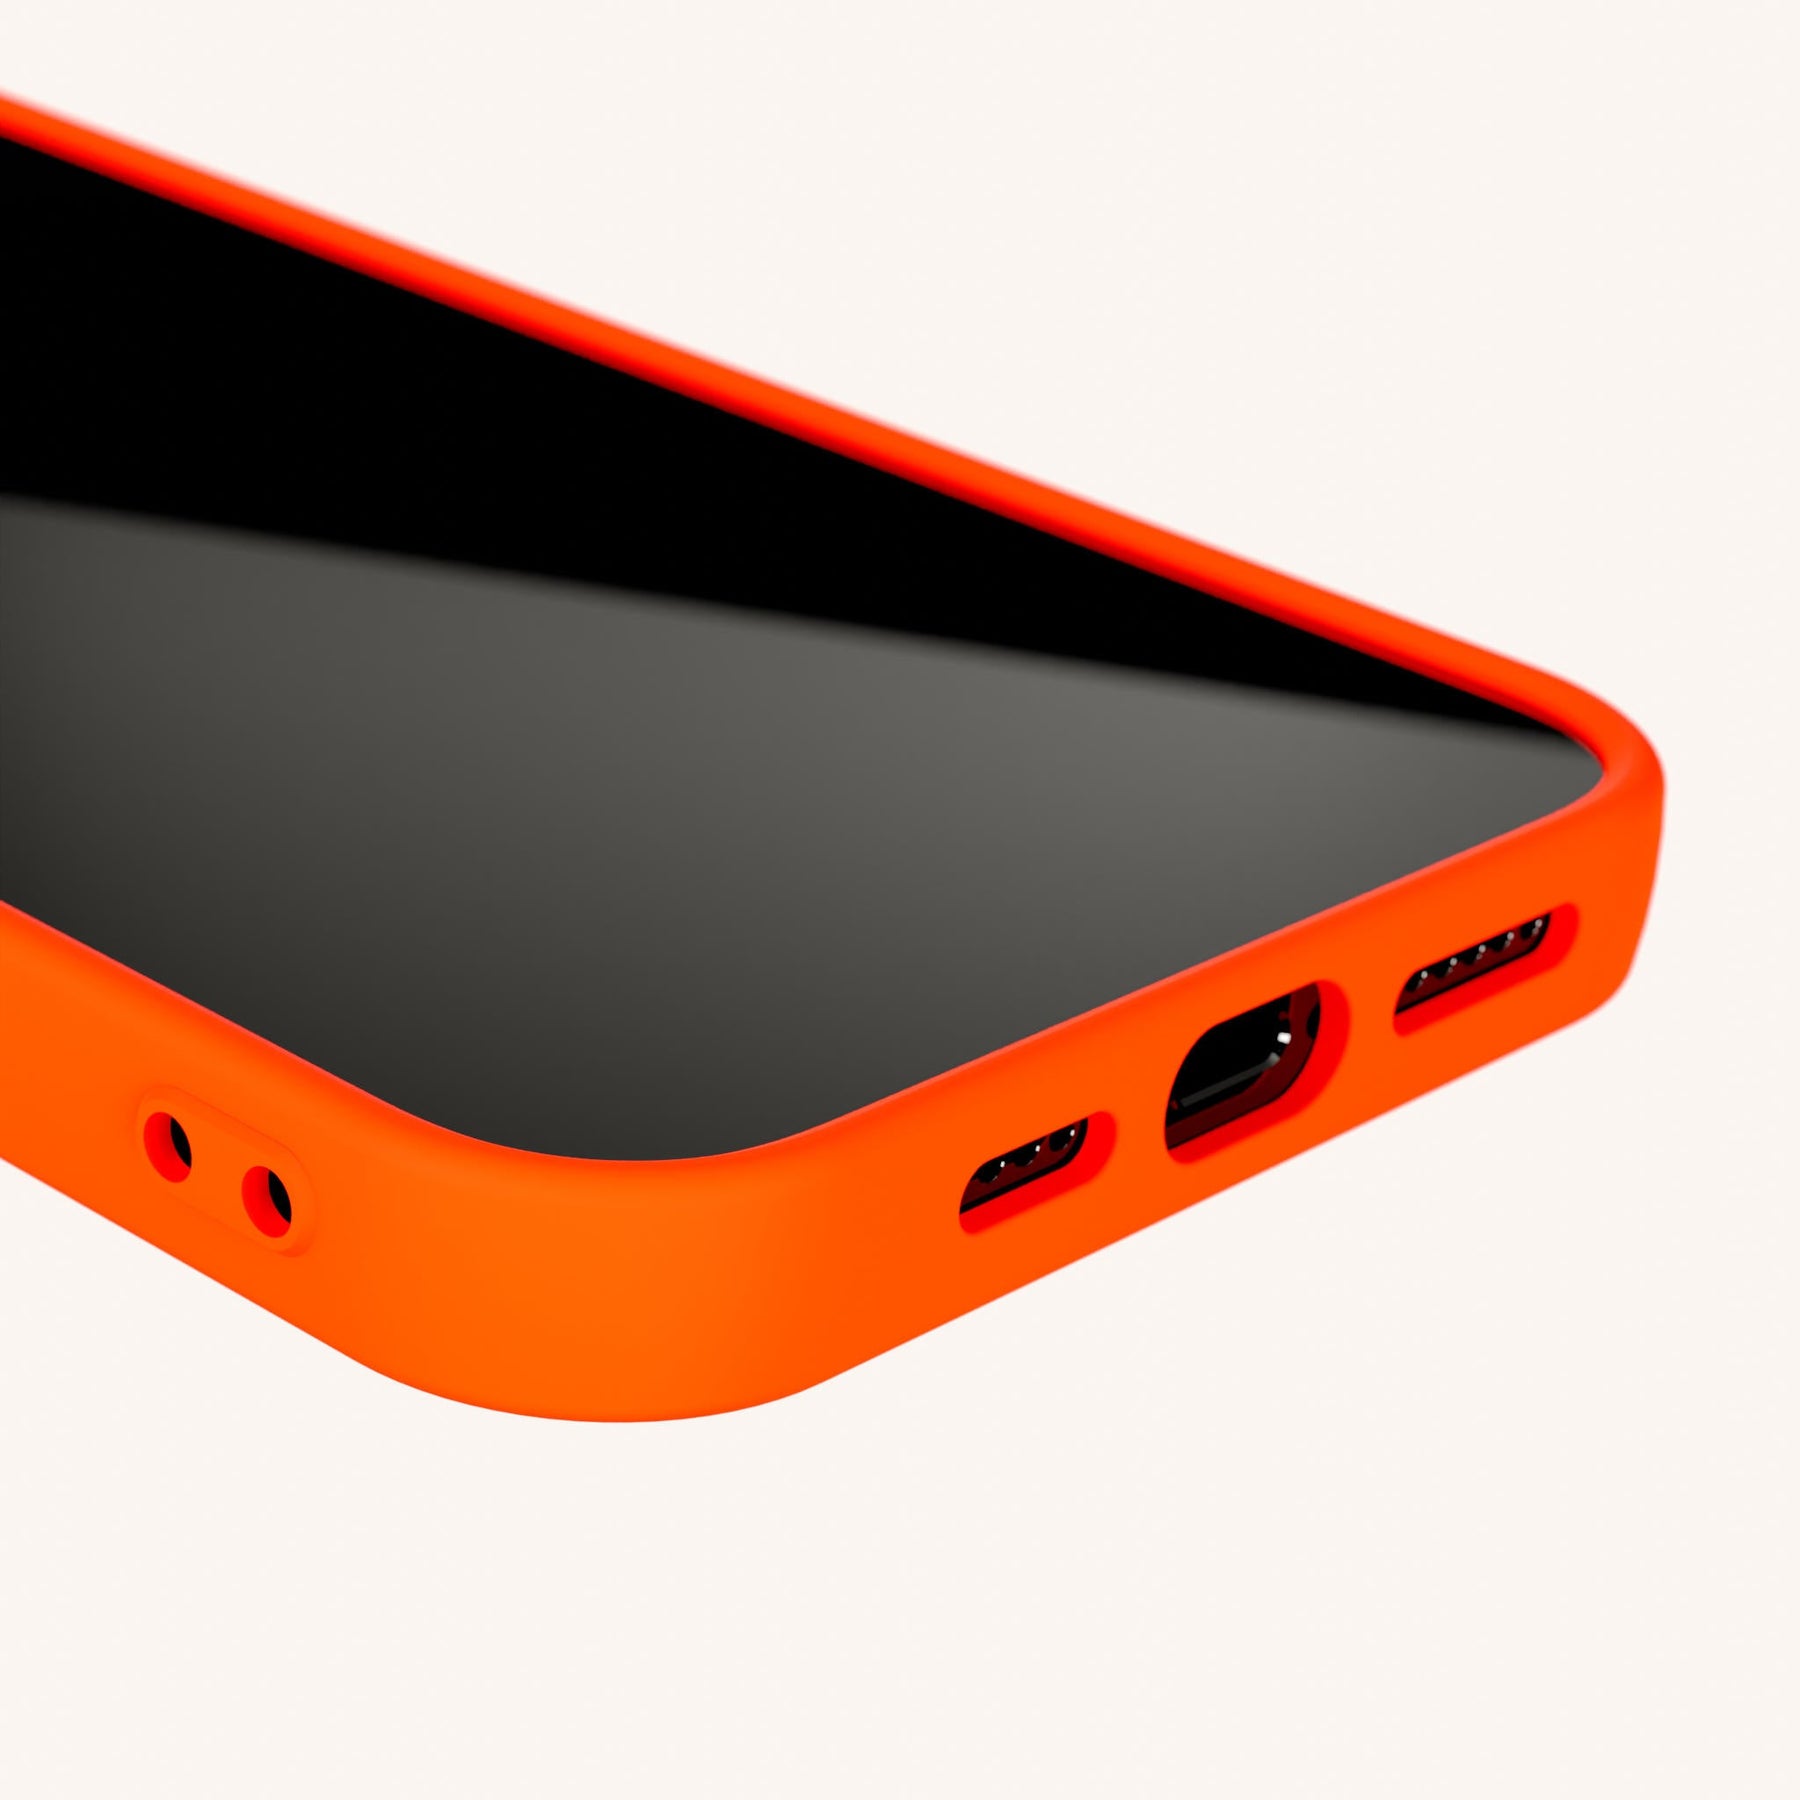 Phone Case in Neon Orange